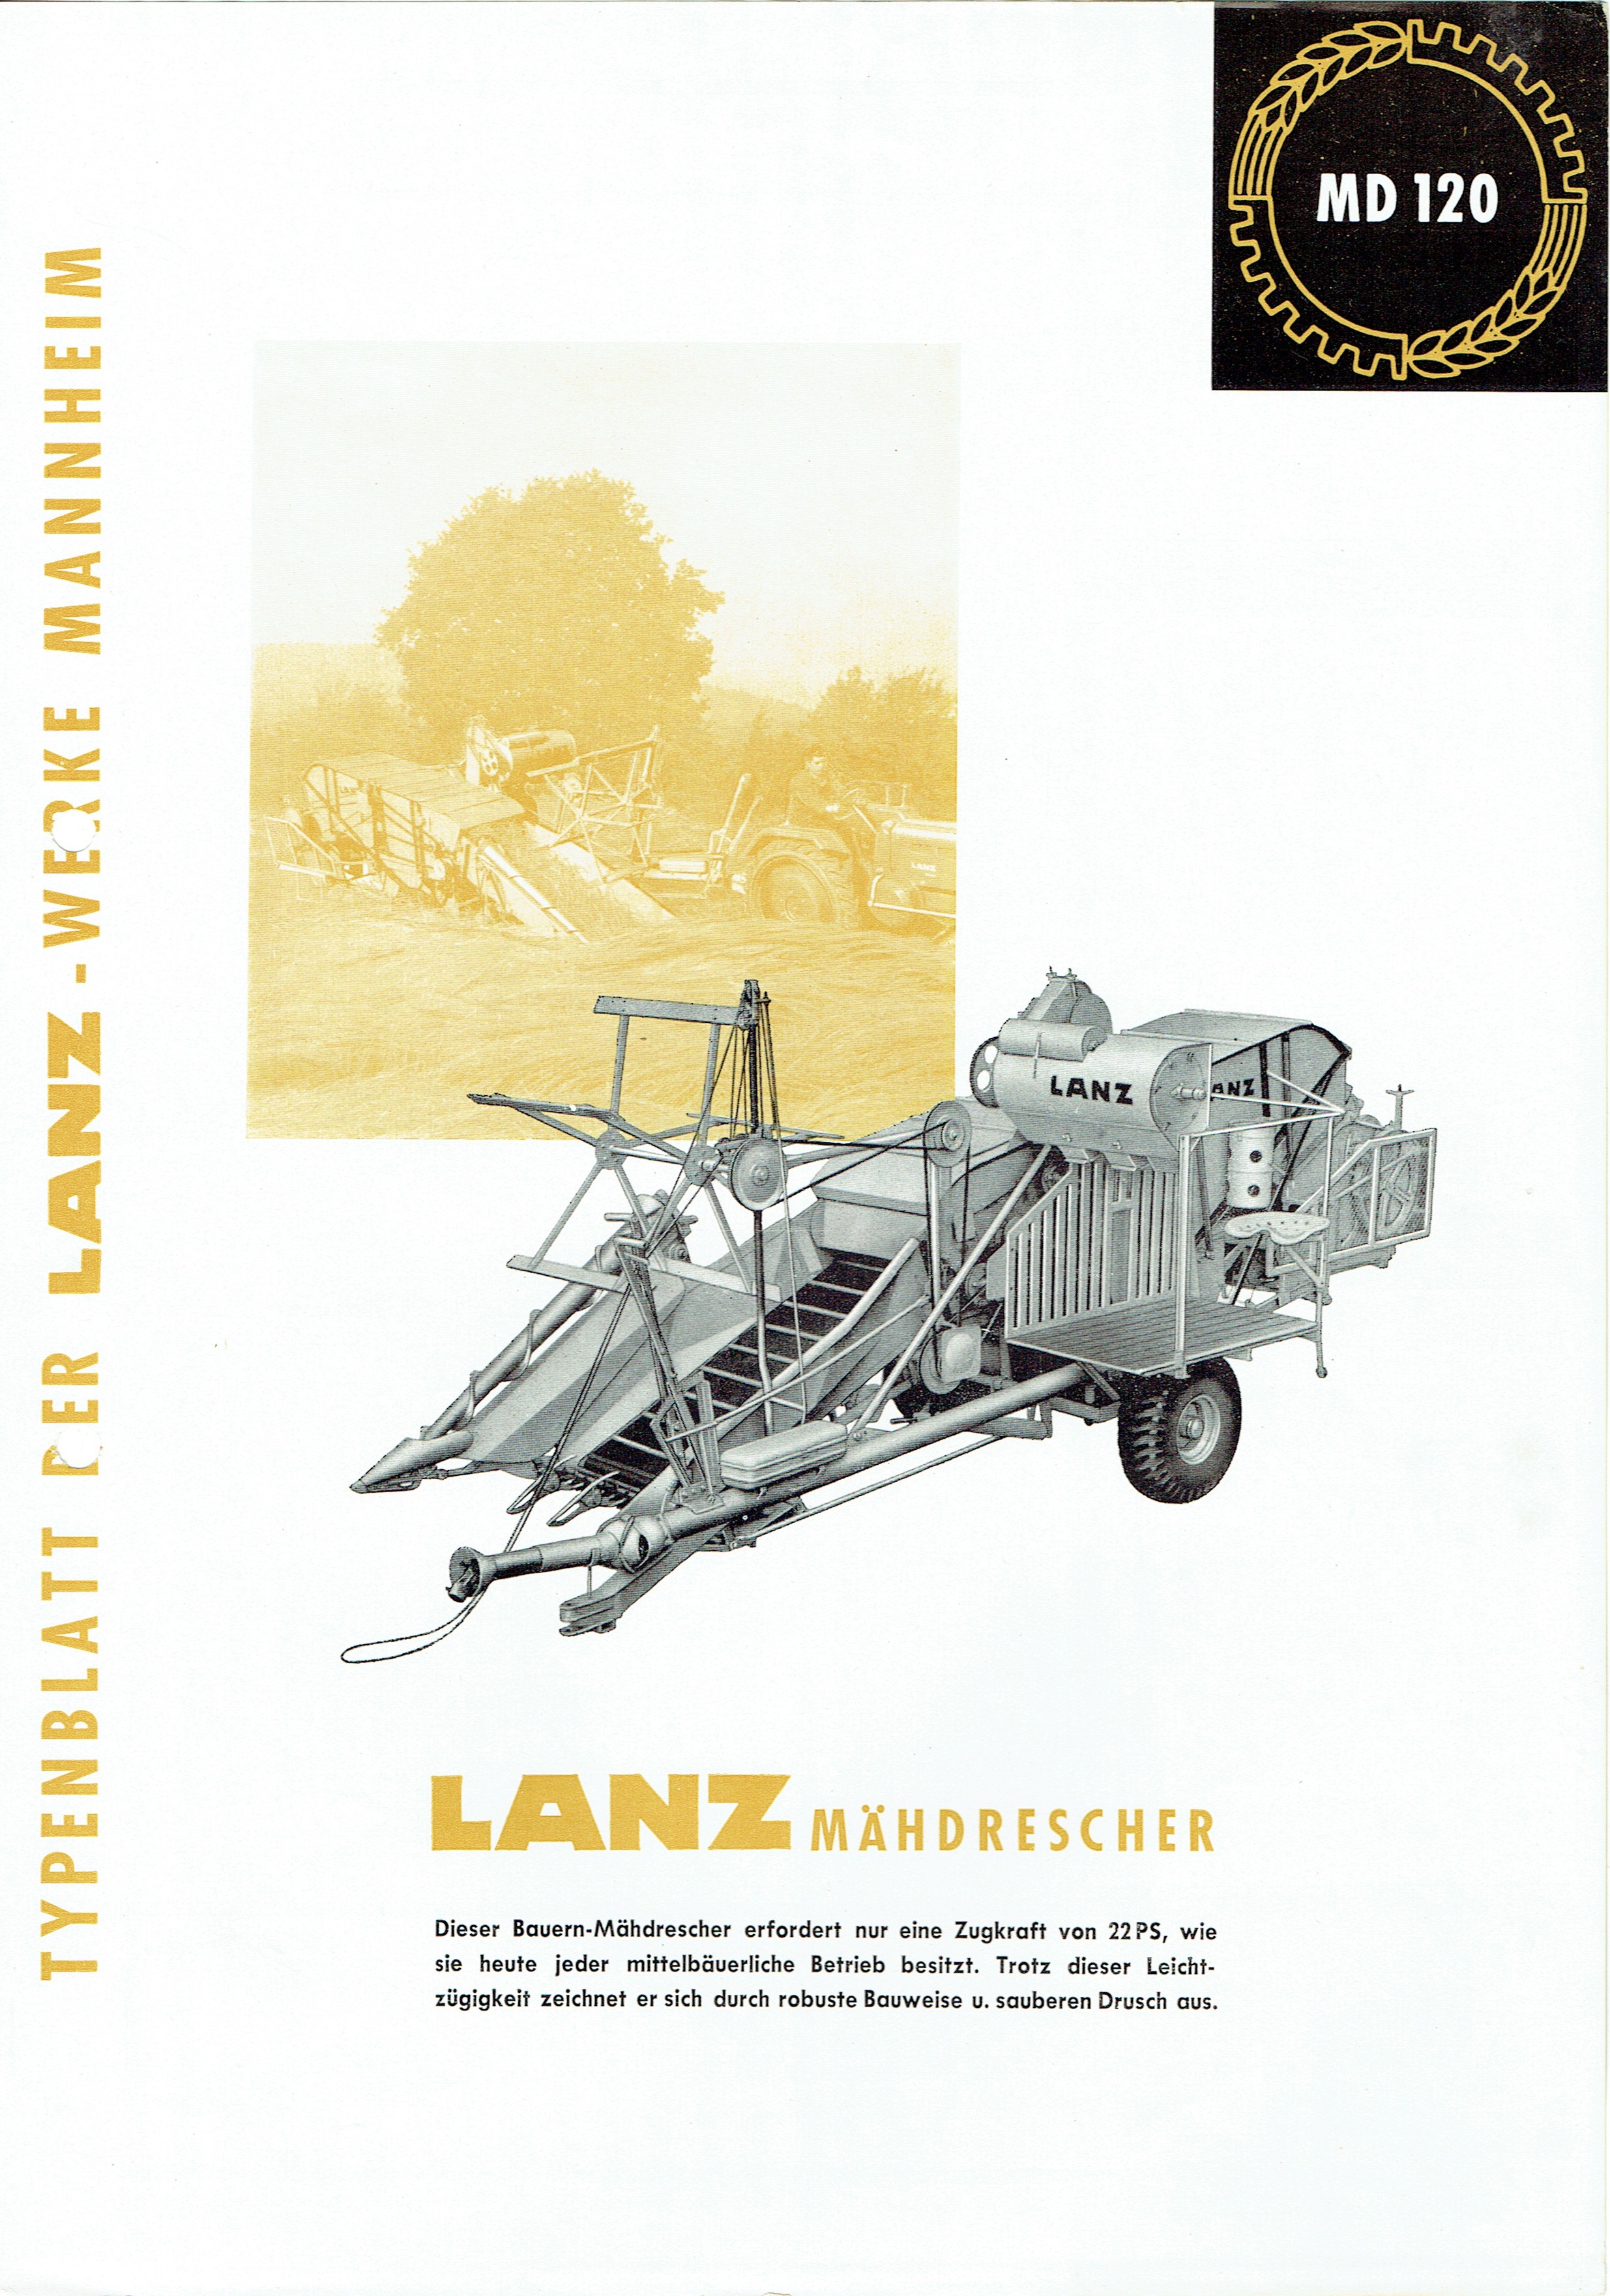 LANZ MD120 (Mähdrescherarchiv Kühnstetter CC BY-NC-SA)